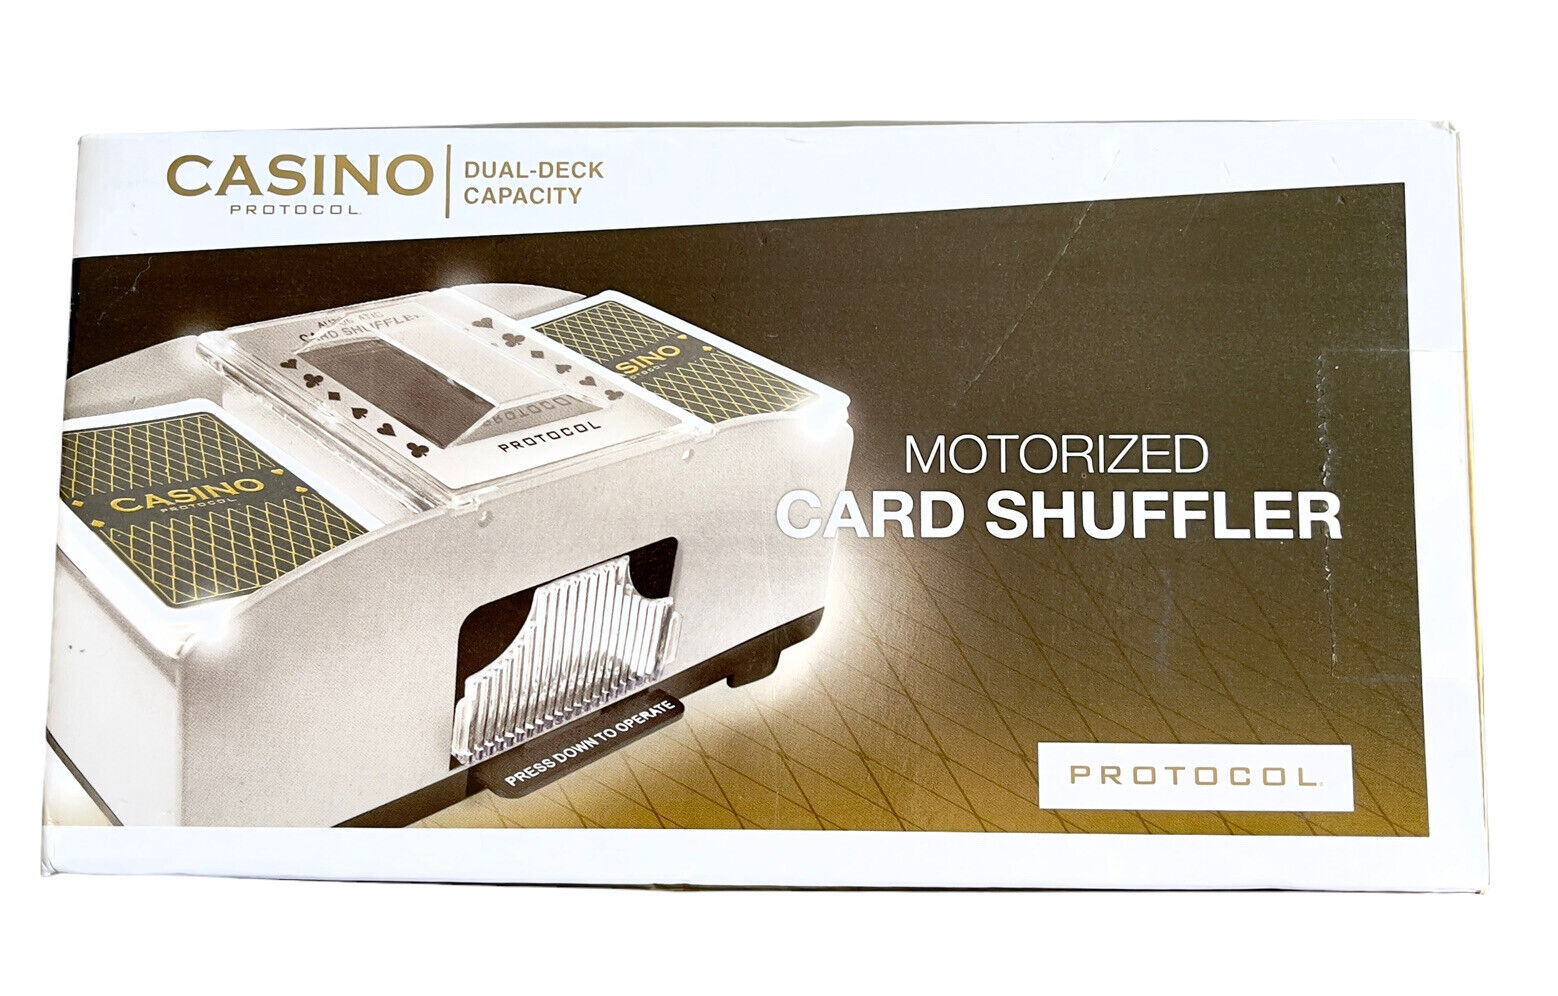 Casino Protocol Dual-Deck Capacity Card Shuffler Battery-operated Open Box